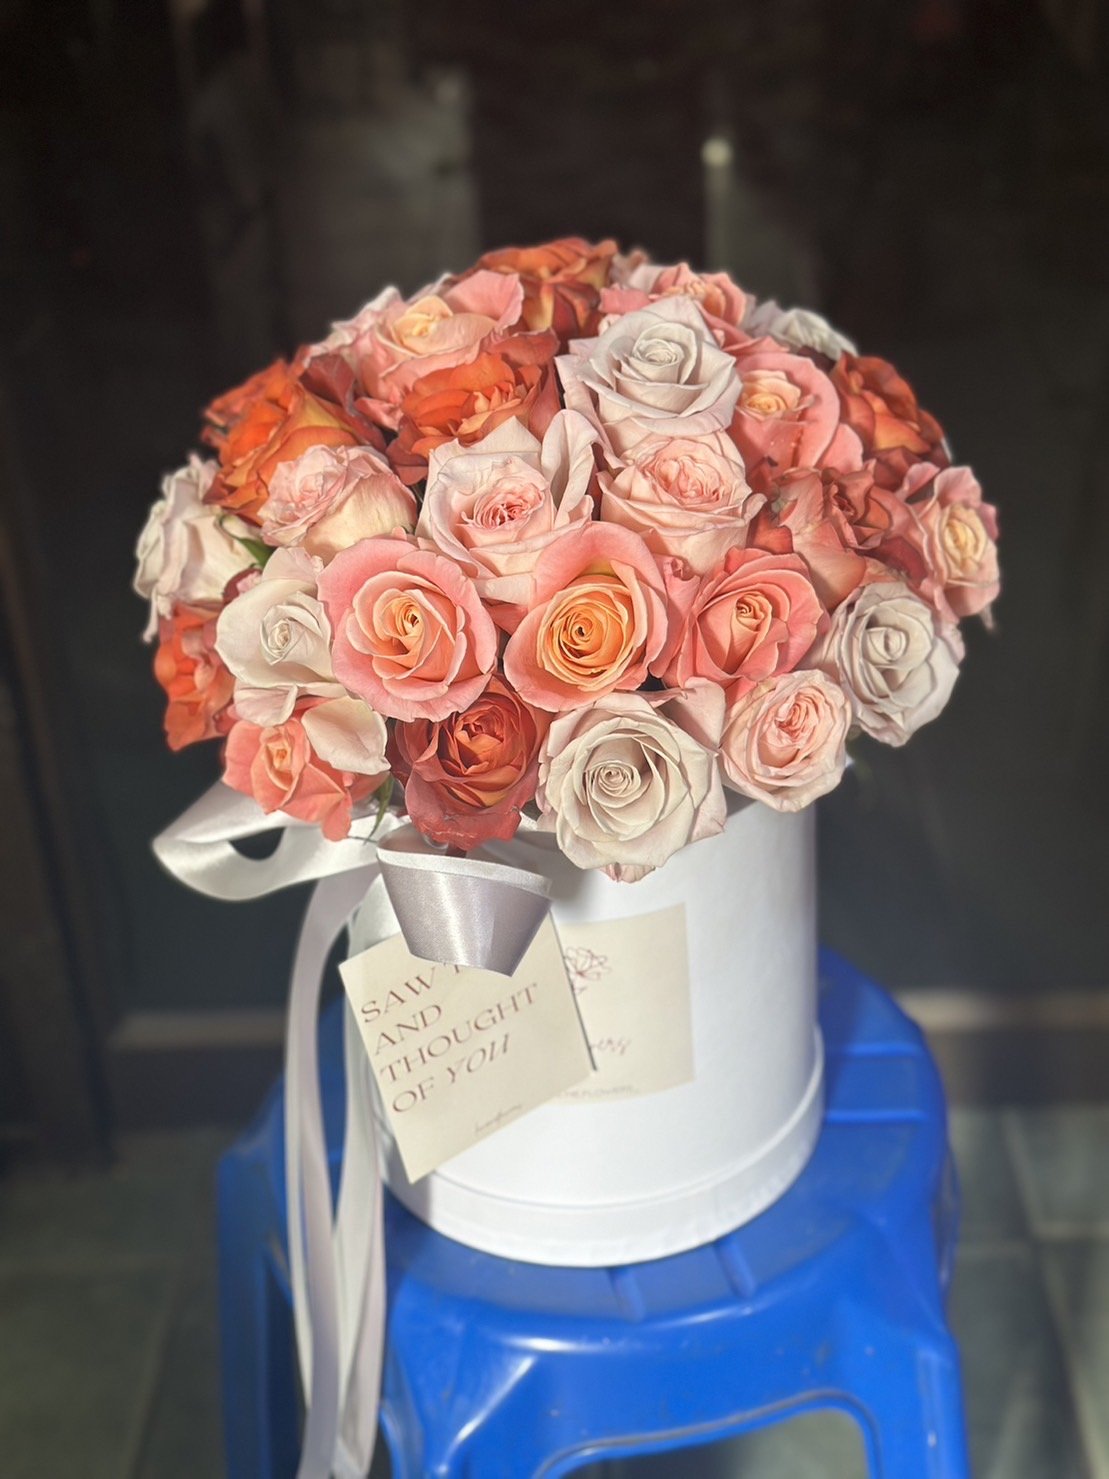 30 Multicolor Roses - FlowerBox